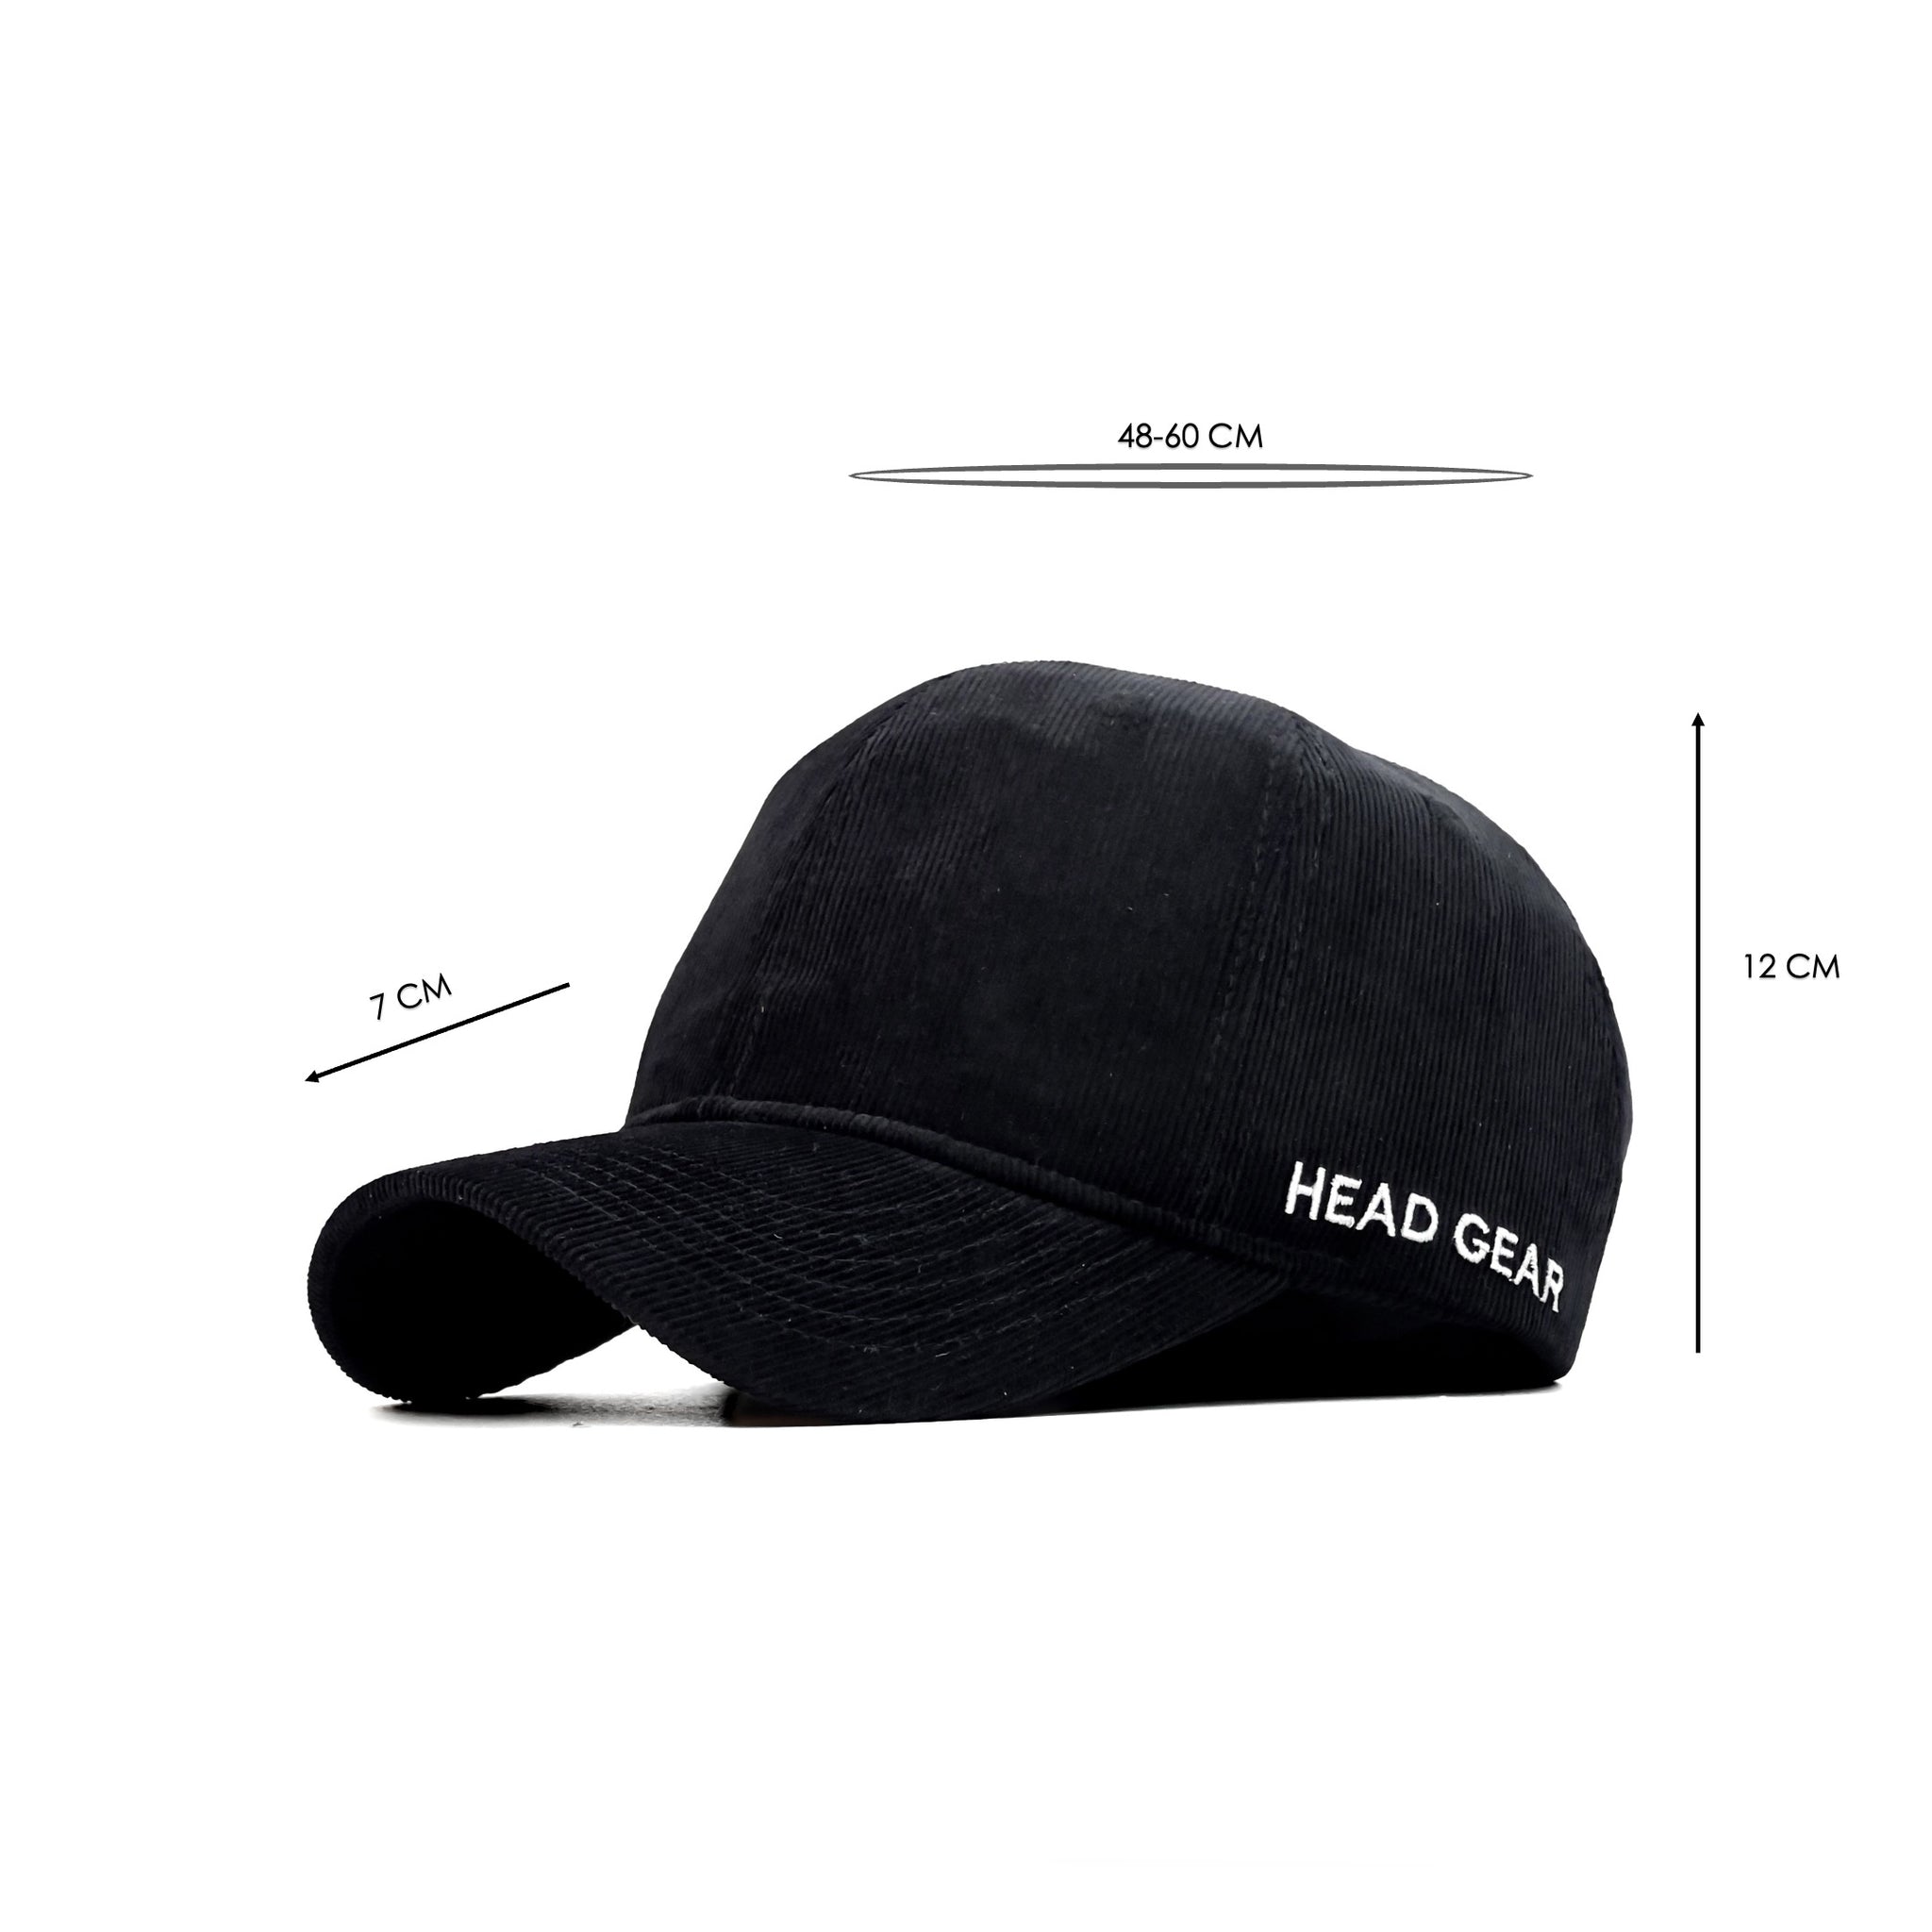 HEAD GEAR BLACK CORDUROY CAP